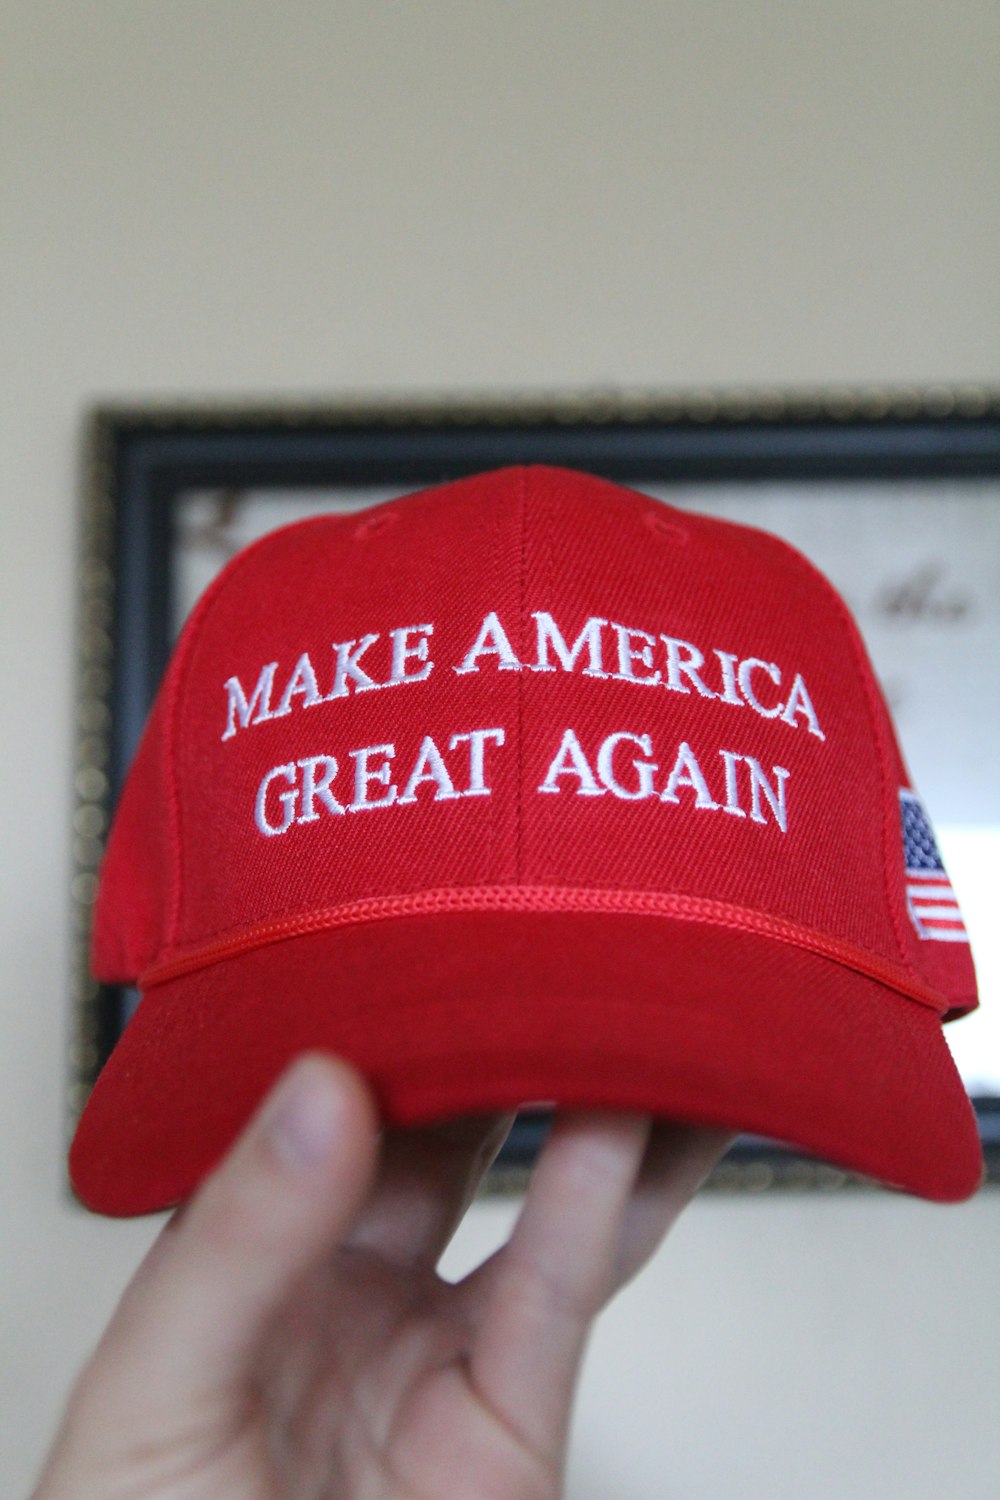 Un chapeau rouge qui dit Make America Great Again